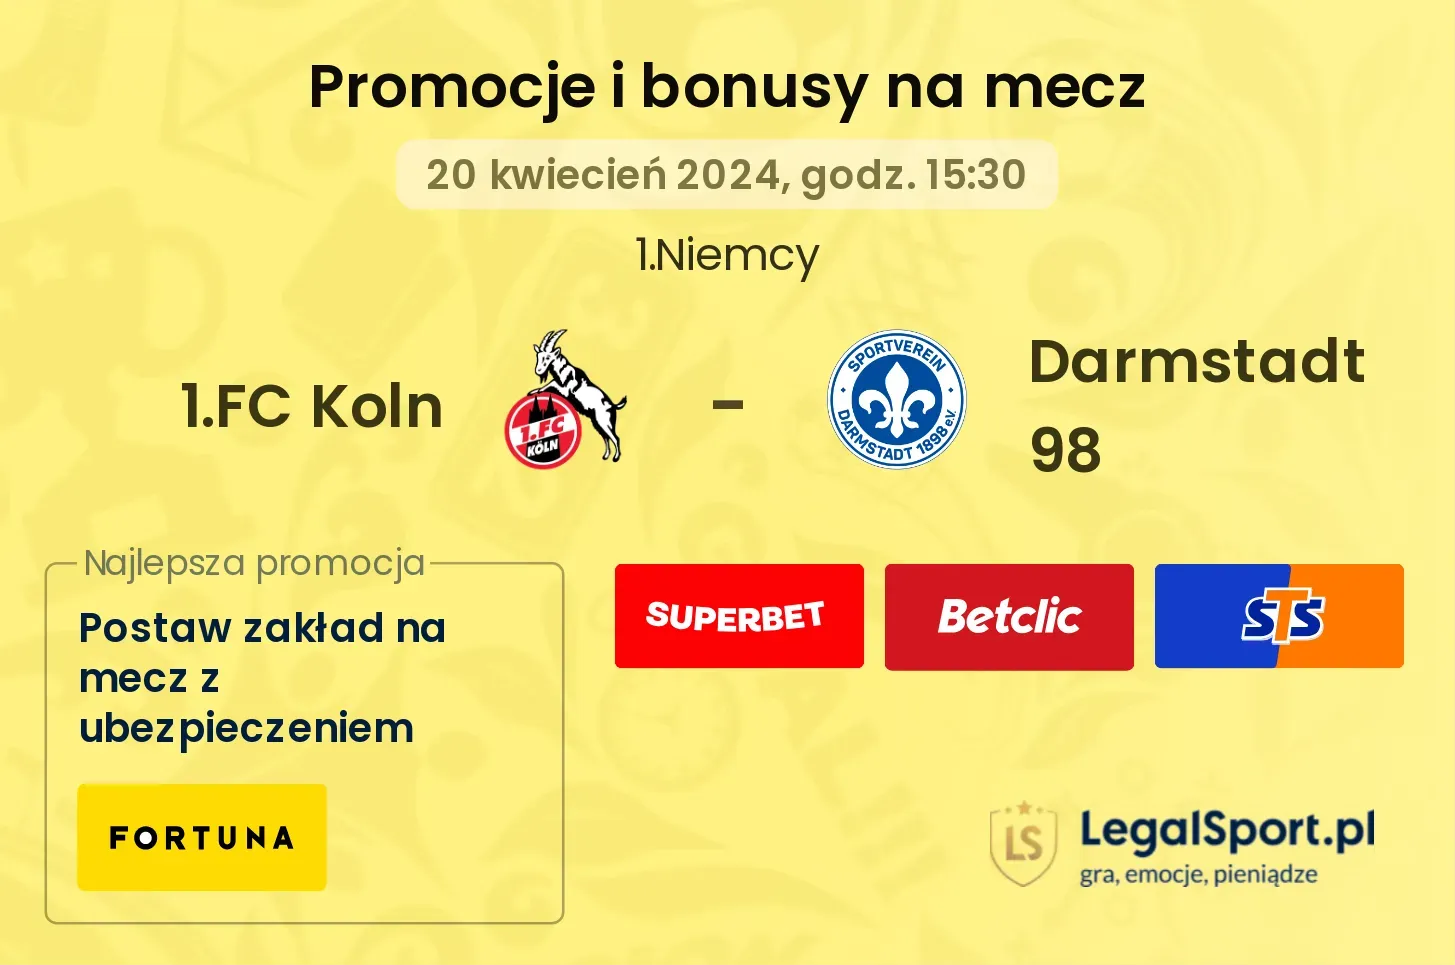 1.FC Koln - Darmstadt 98 promocje bonusy na mecz